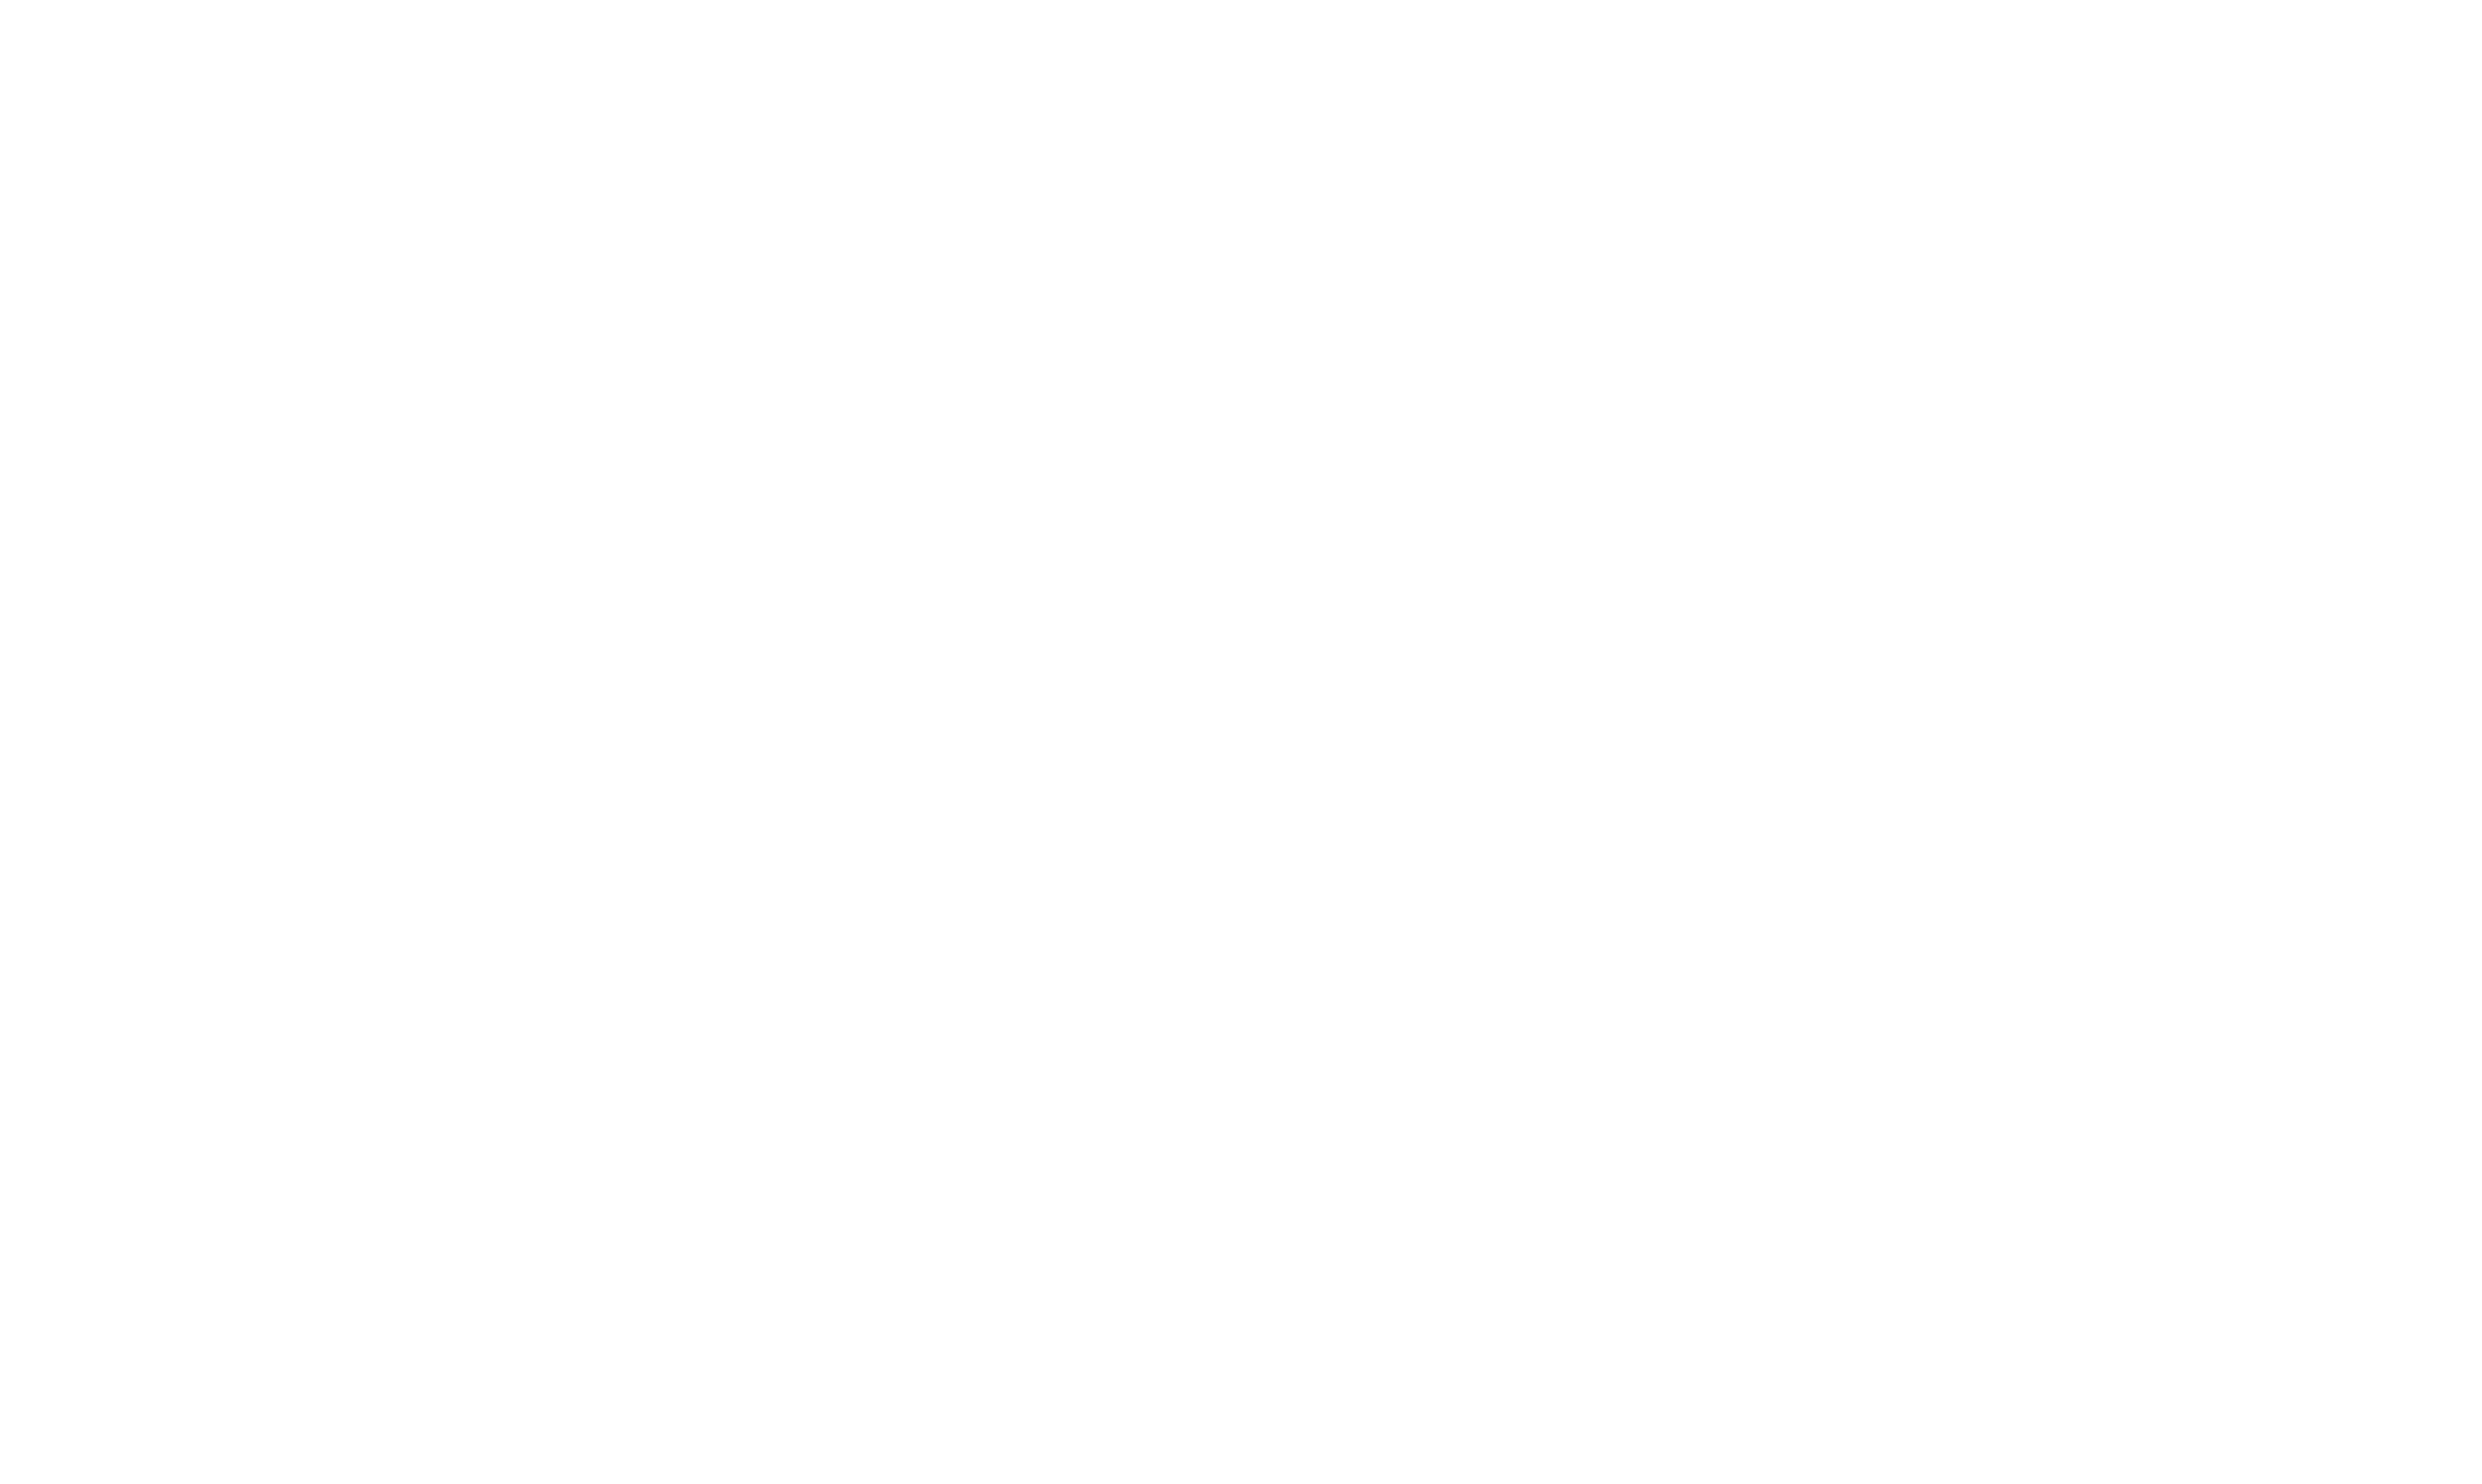 Breaking Barriers Rowing & Fitness